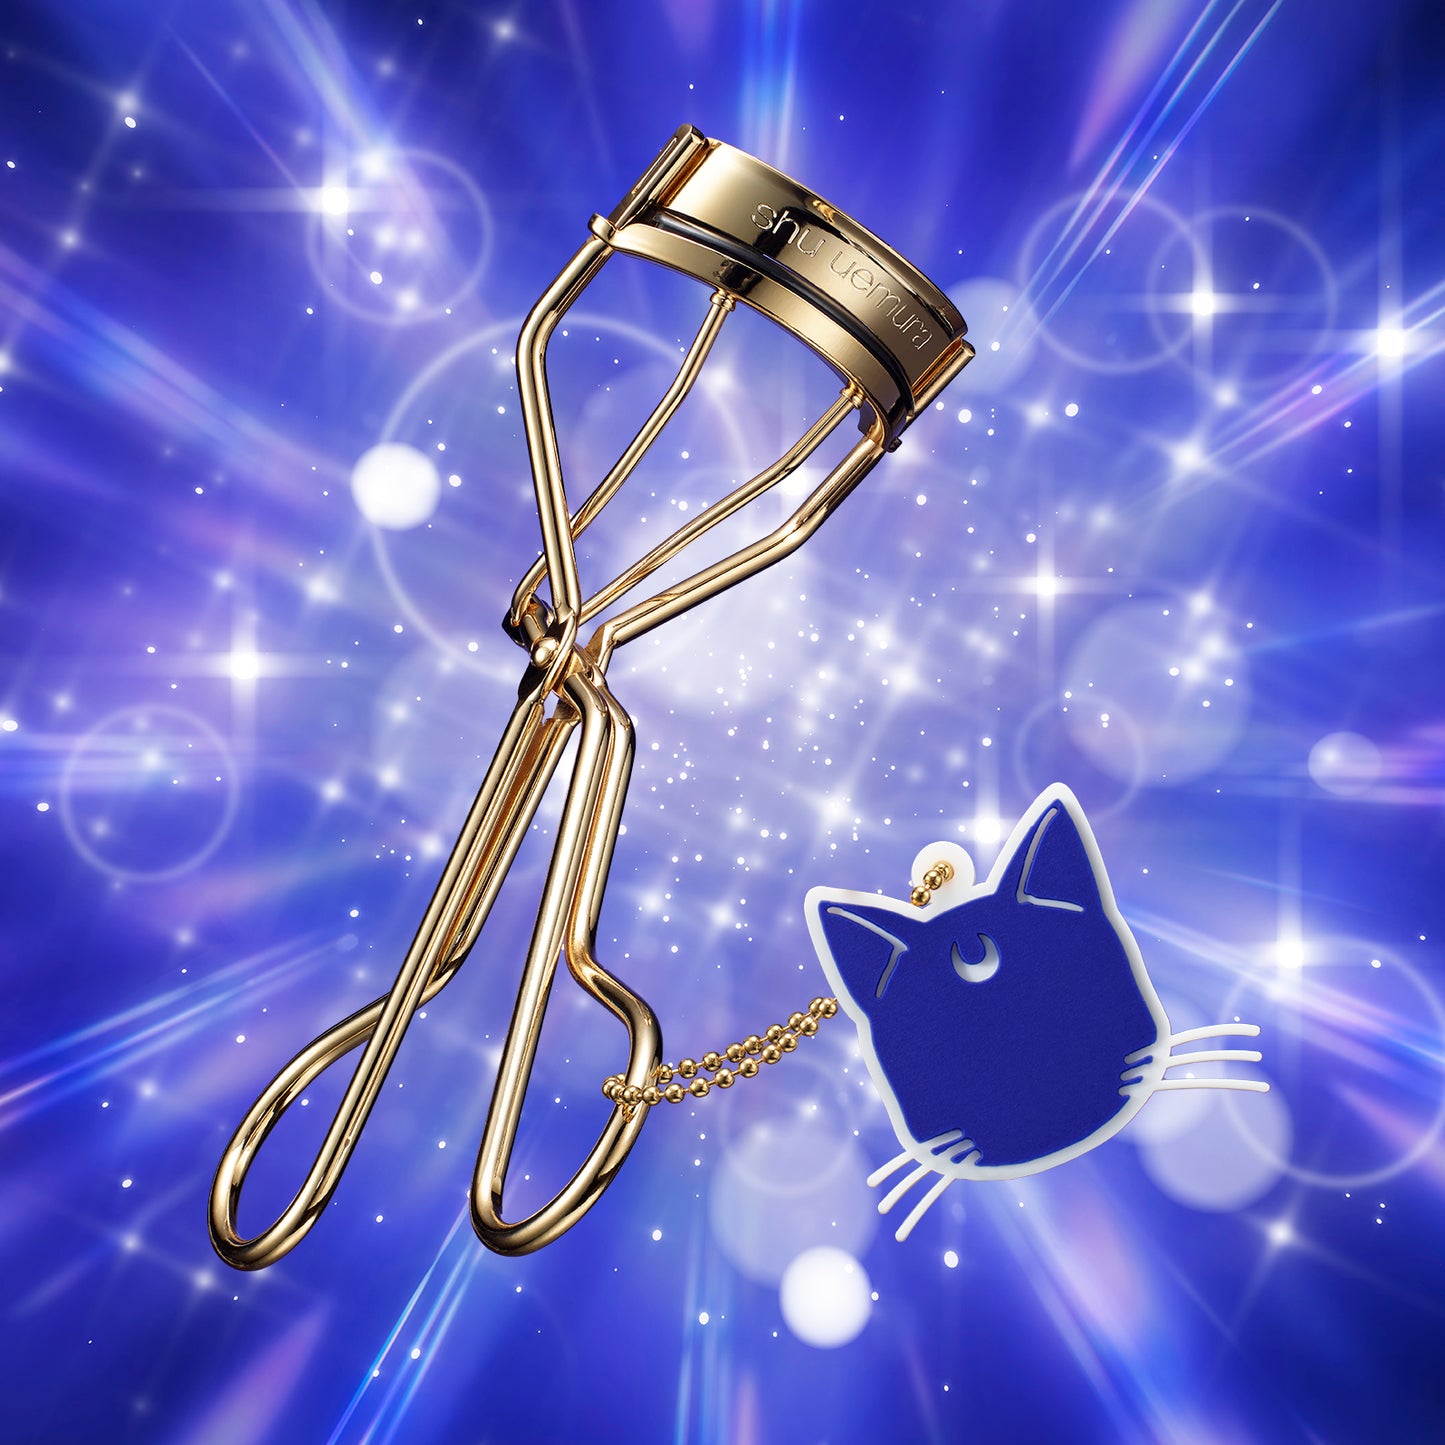 Shu Uemura x Sailor Moon Eyelash Curler (Limited Edition)